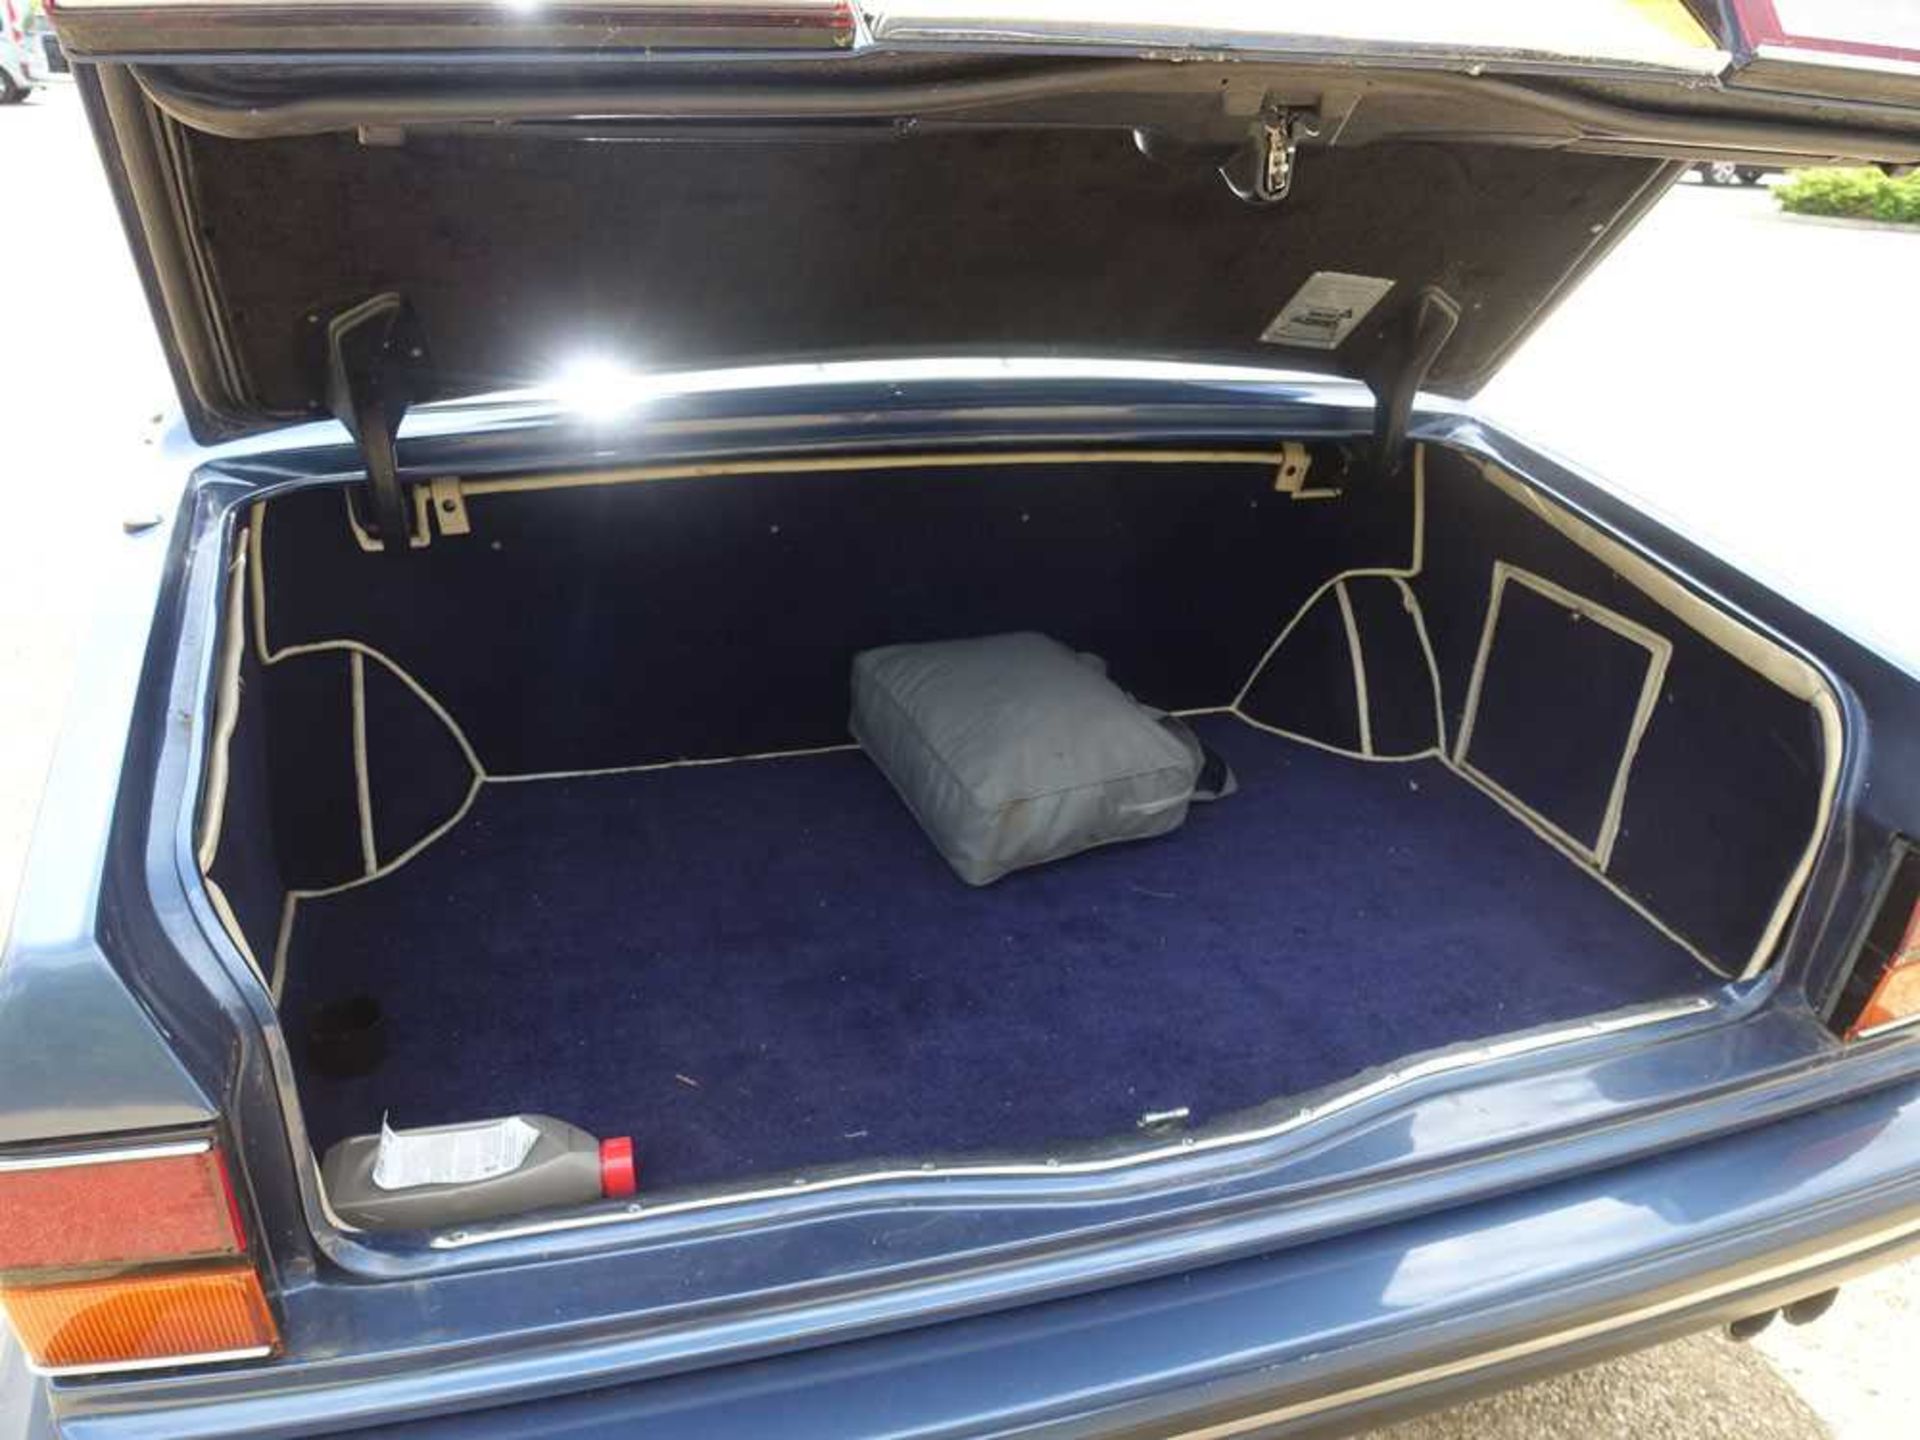 1989 (F registration) Bentley Turbo R 6750cc V8 automatic 4 door saloon in blue, registration F429 - Image 9 of 20